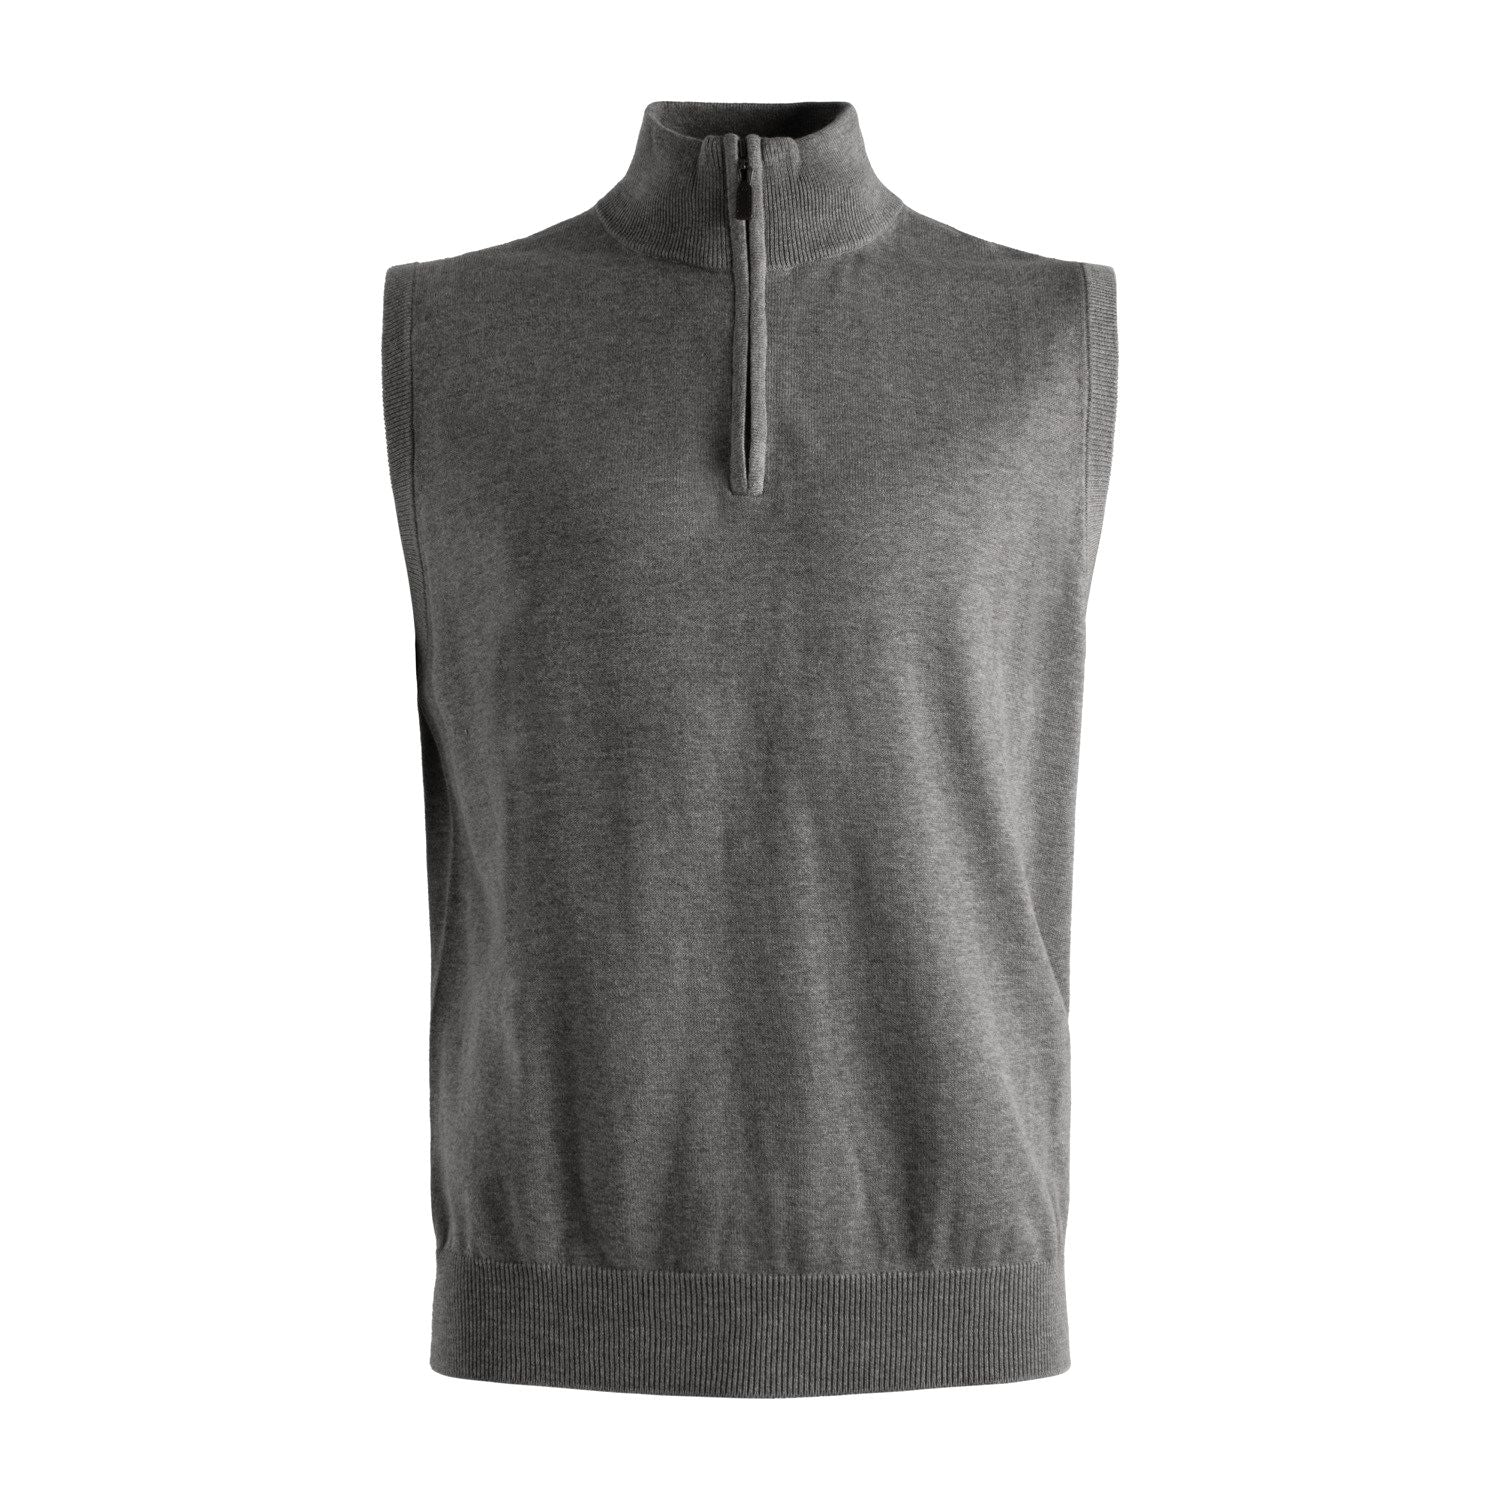 Cotton and Silk Blend Zip-Neck Sweater Vest in Grey by Viyella